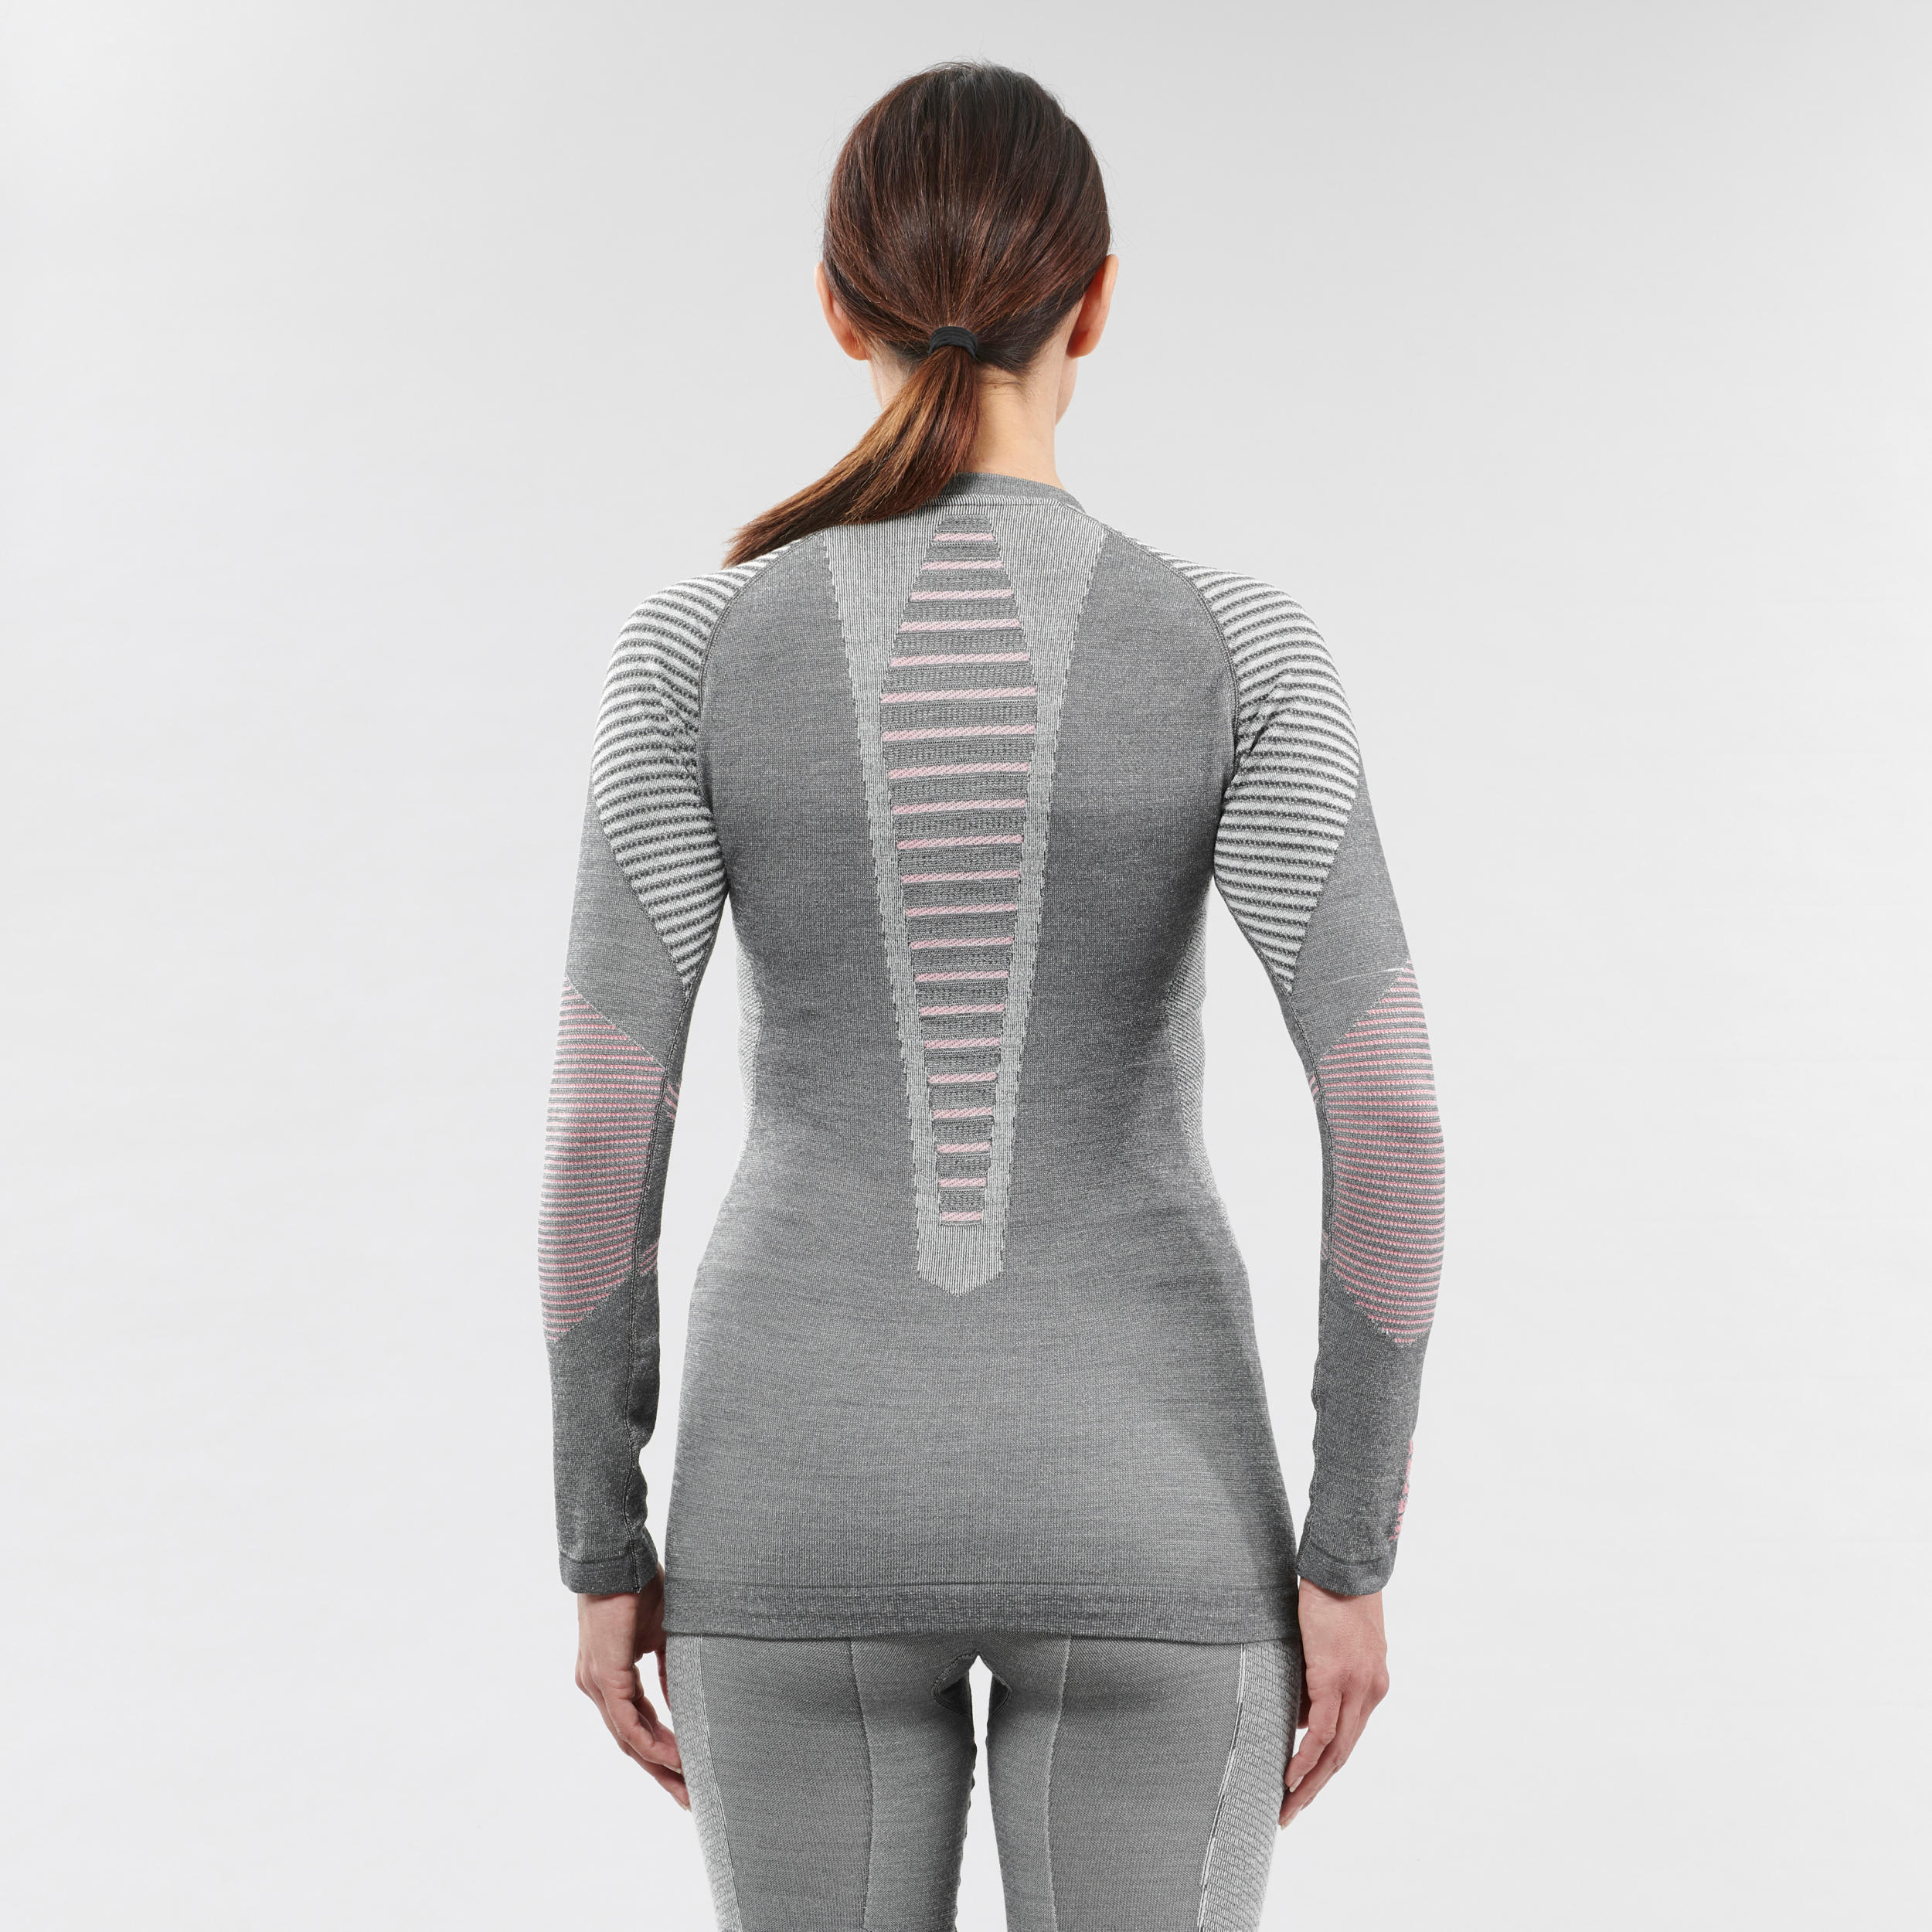 Women’s Merino Wool Base Layer Top - BL 900 Grey